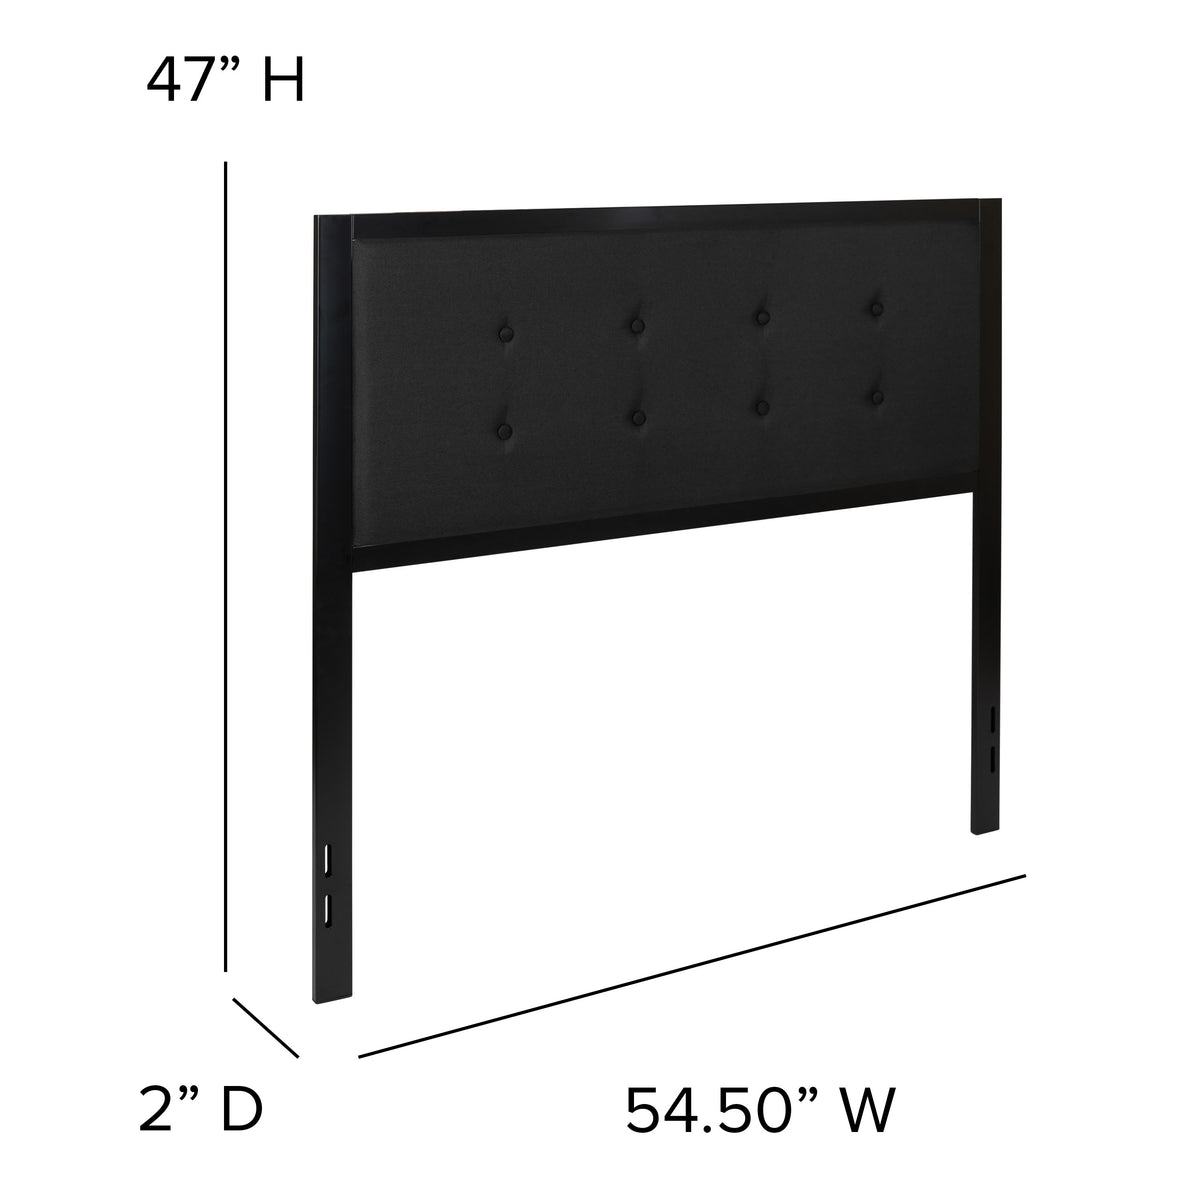 Black,Full |#| Full Size Upholstered Metal Panel Headboard in Tufted Black Fabric